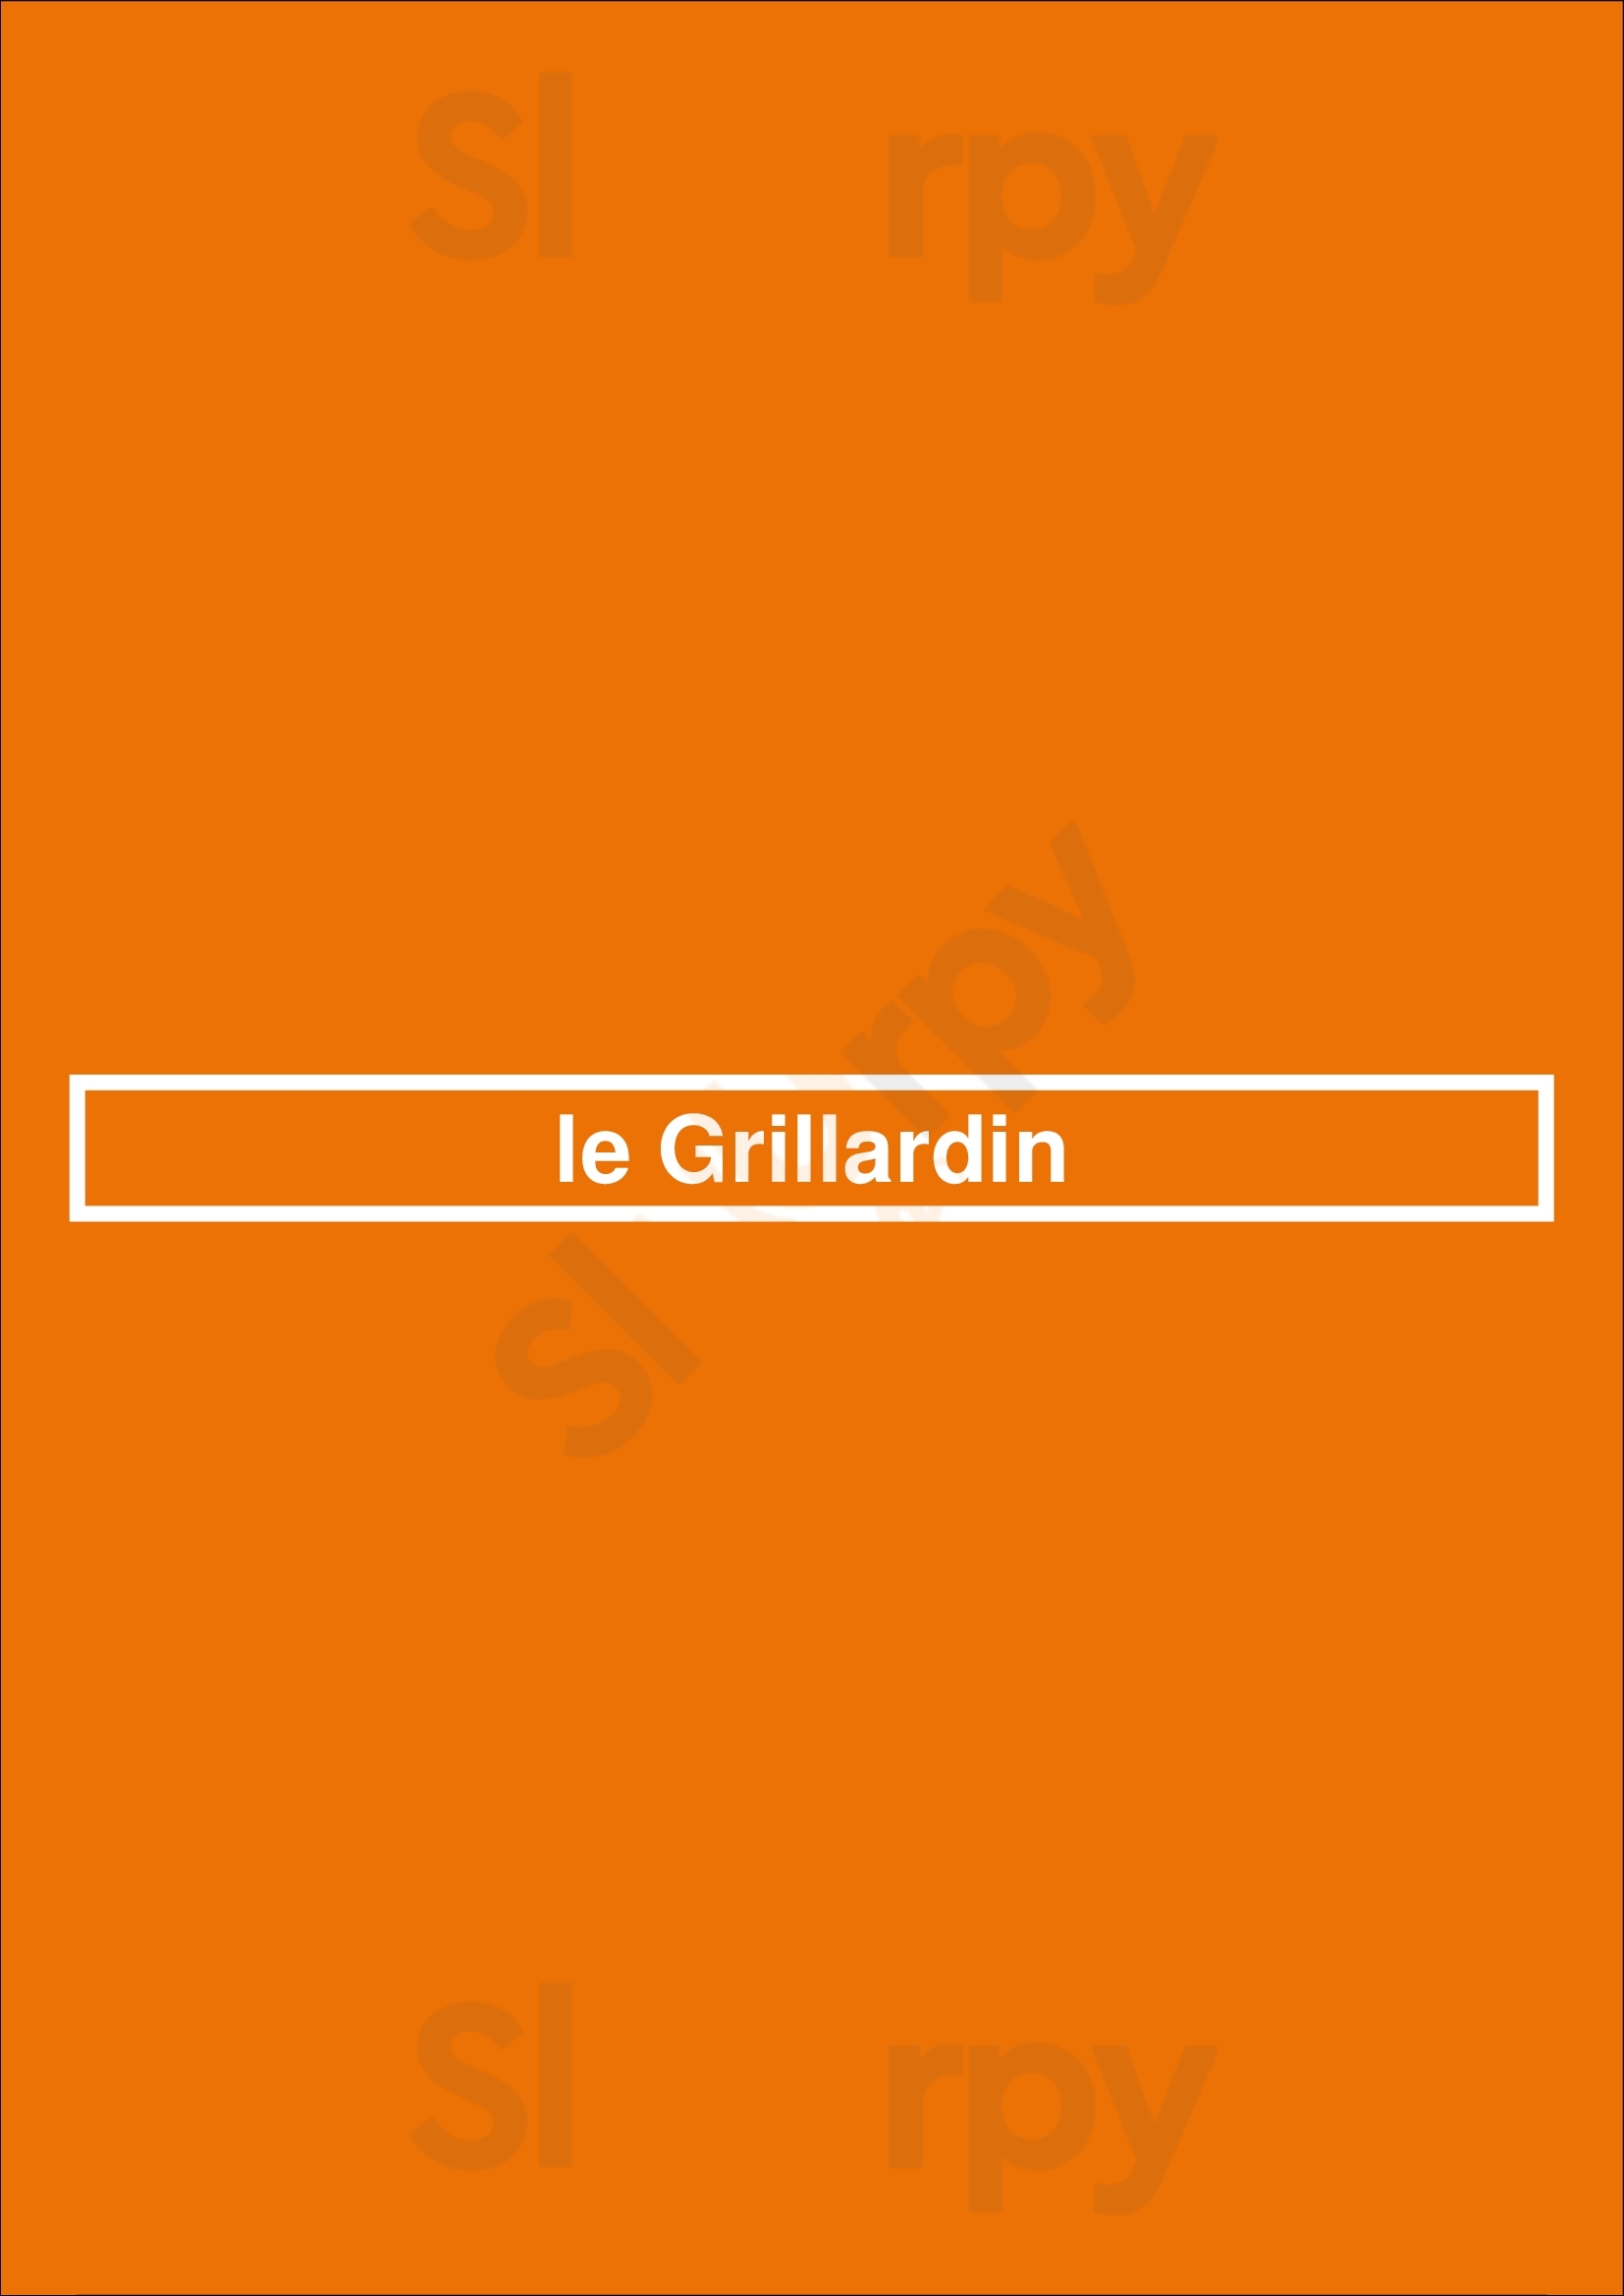 Le Grillardin Bruxelles Menu - 1